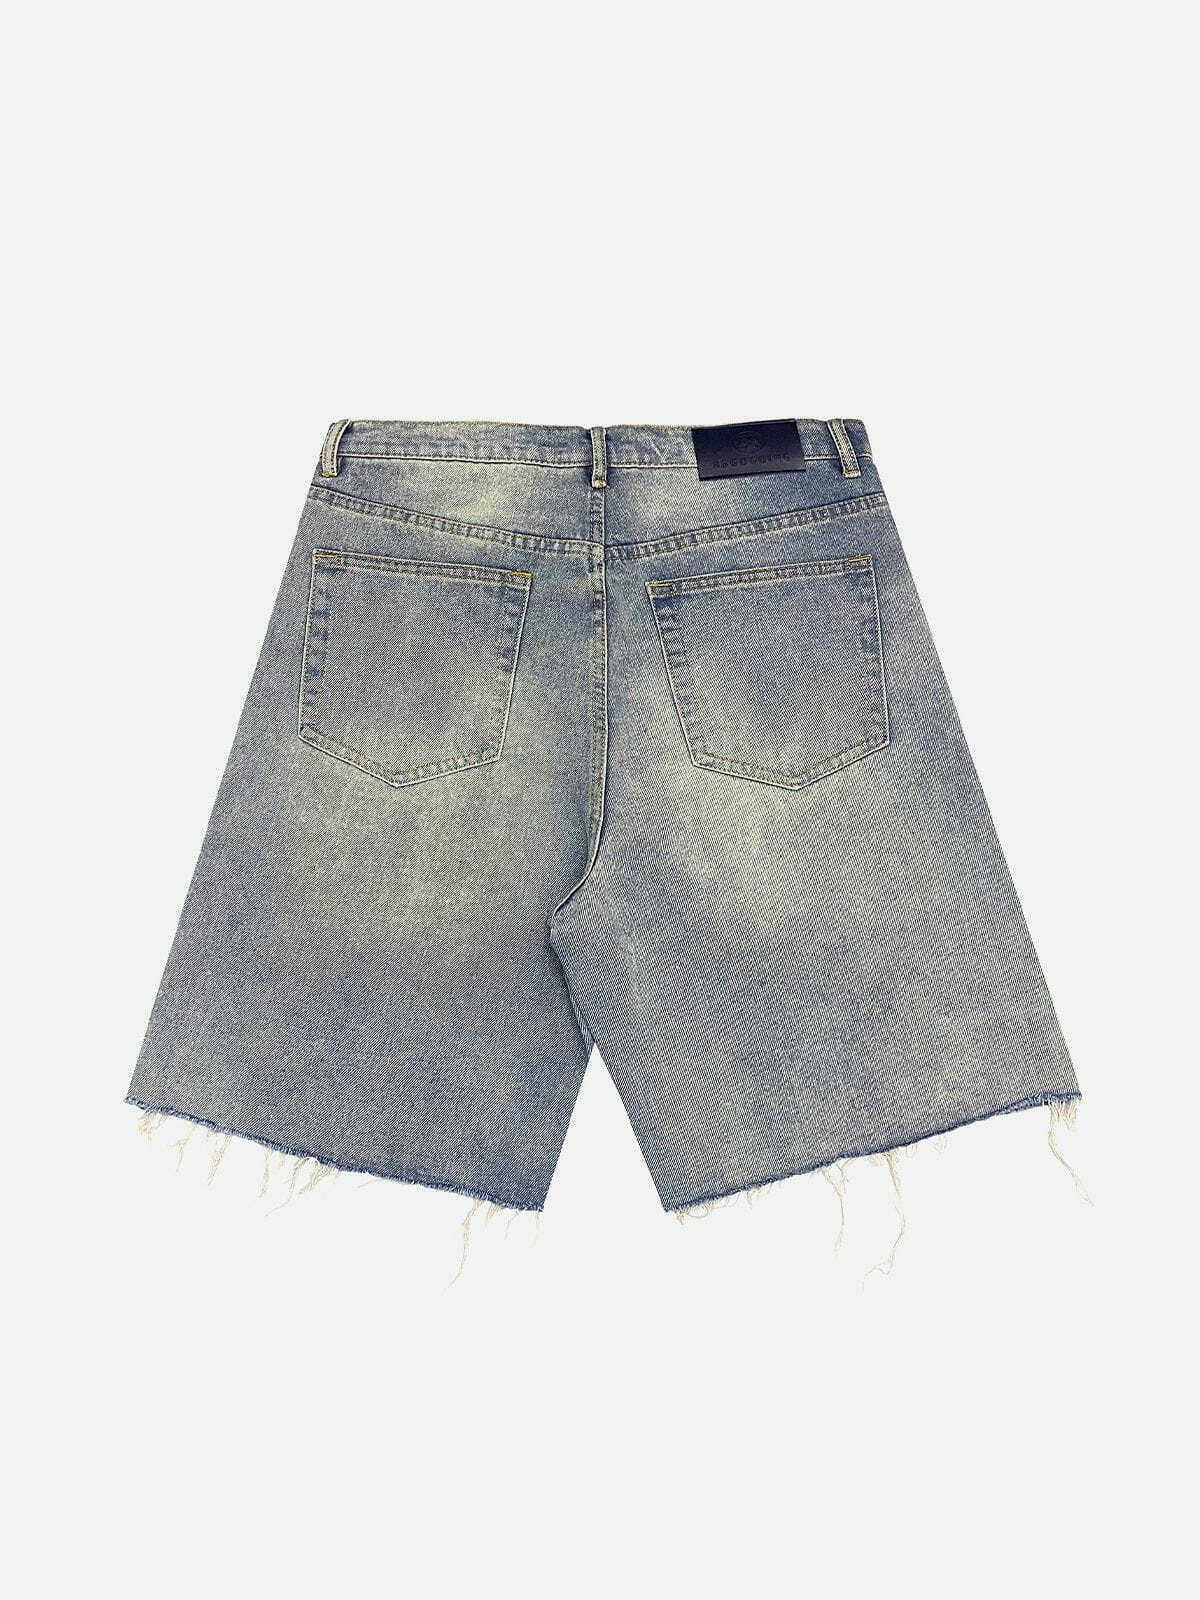 washed denim cutoff shorts edgy vintage grunge chic 5534